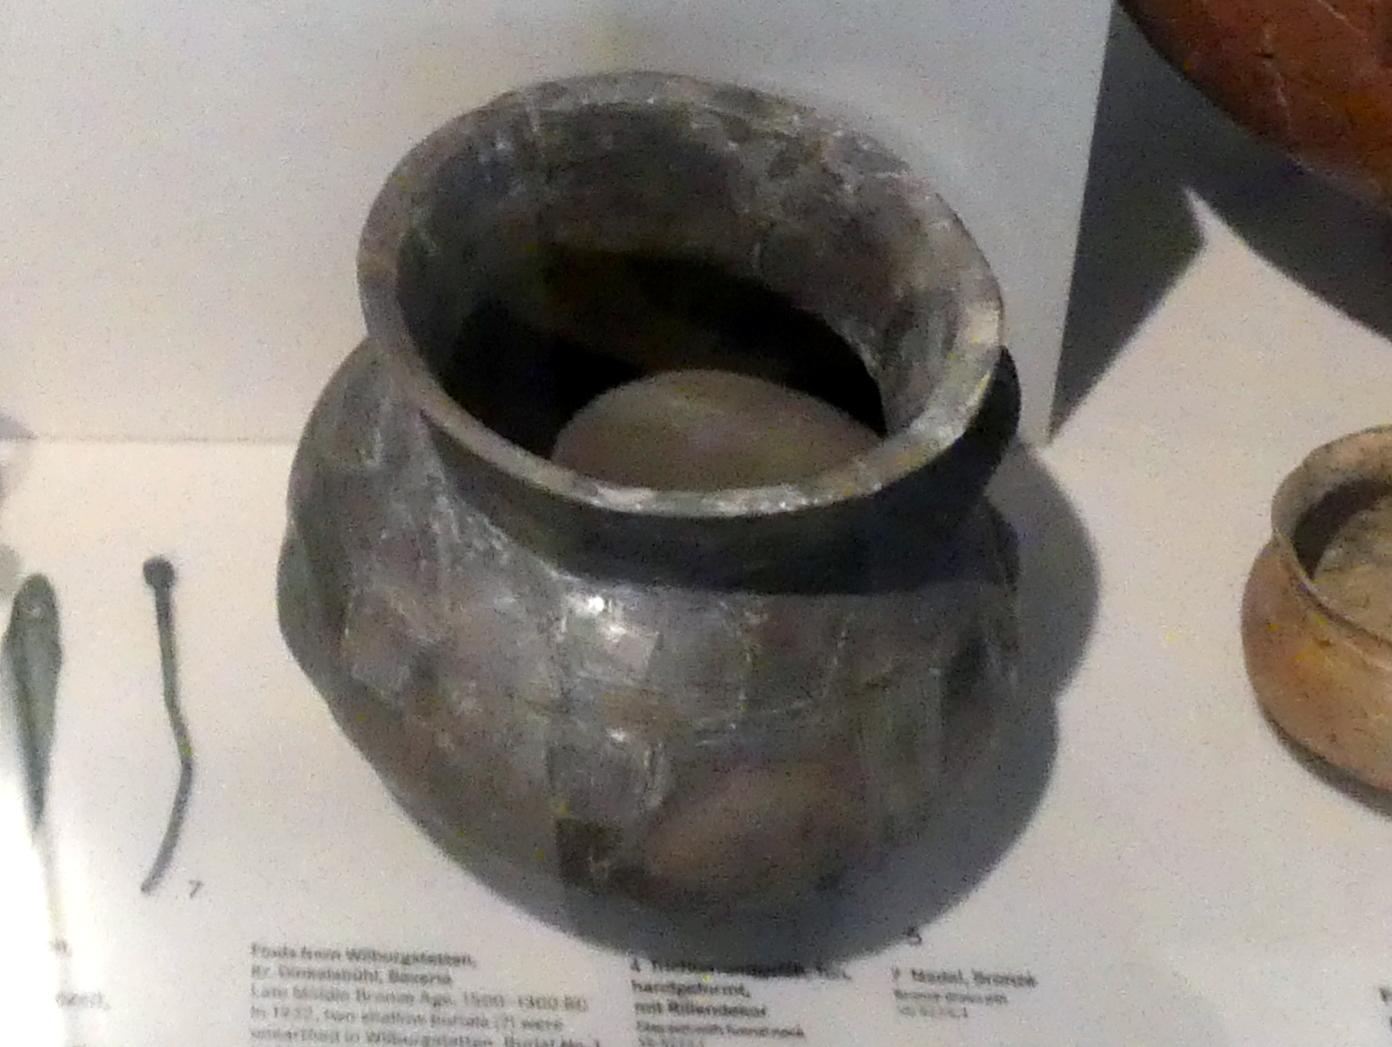 Zylinderhalstopf, Mittlere Bronzezeit C, 1500 - 1300 v. Chr., 1500 - 1300 v. Chr., Bild 1/2